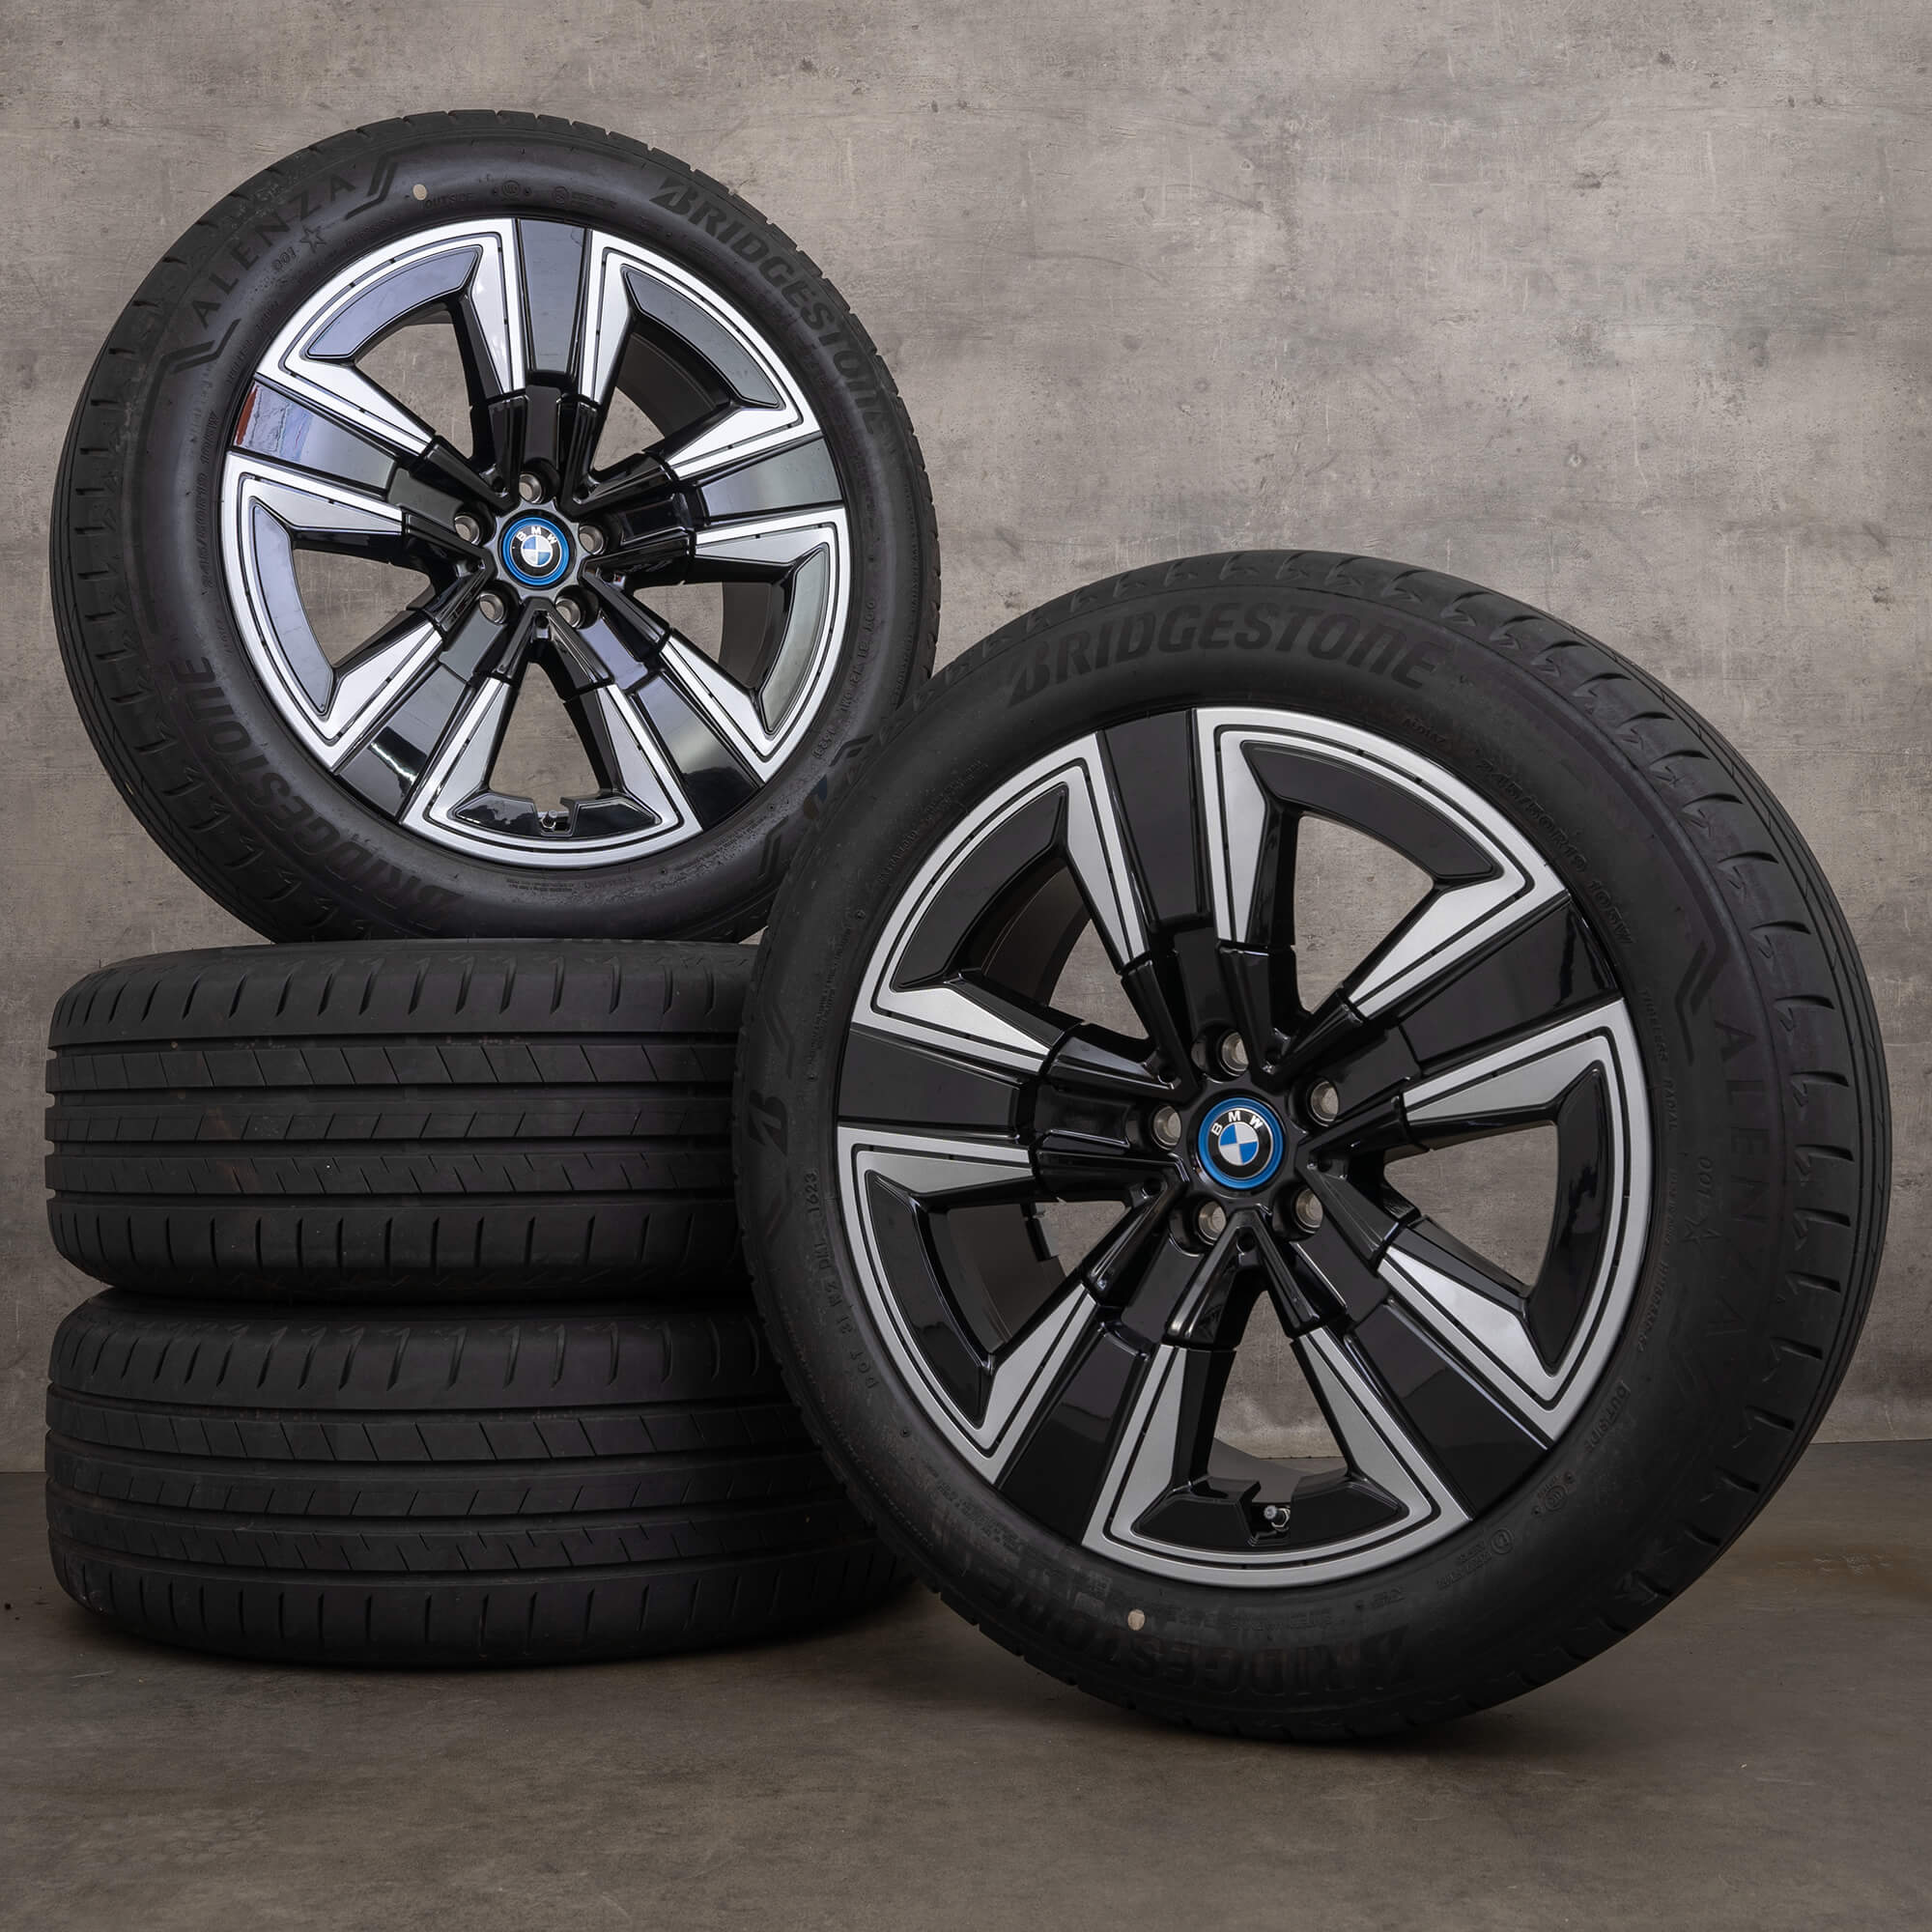 OEM BMW iX3 G08 19 inch summer wheels rims 6895627 Styling 842 jet black